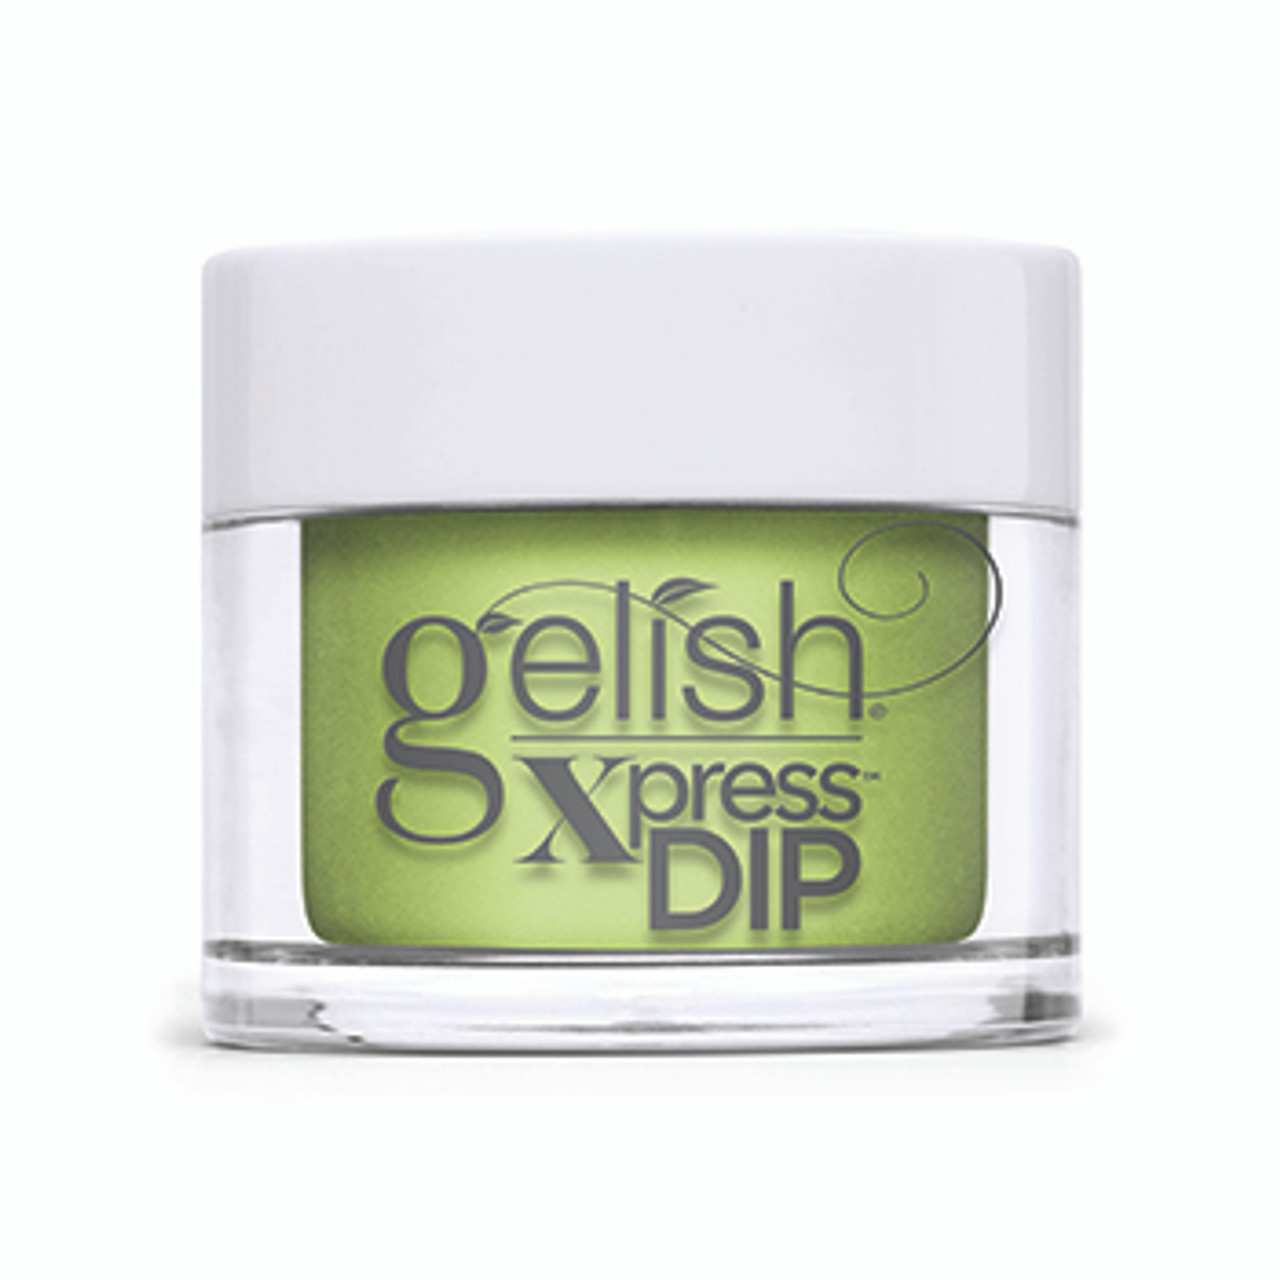 Gelish Xpress Dip Into The Lime-Light - 1.5 oz / 43 g